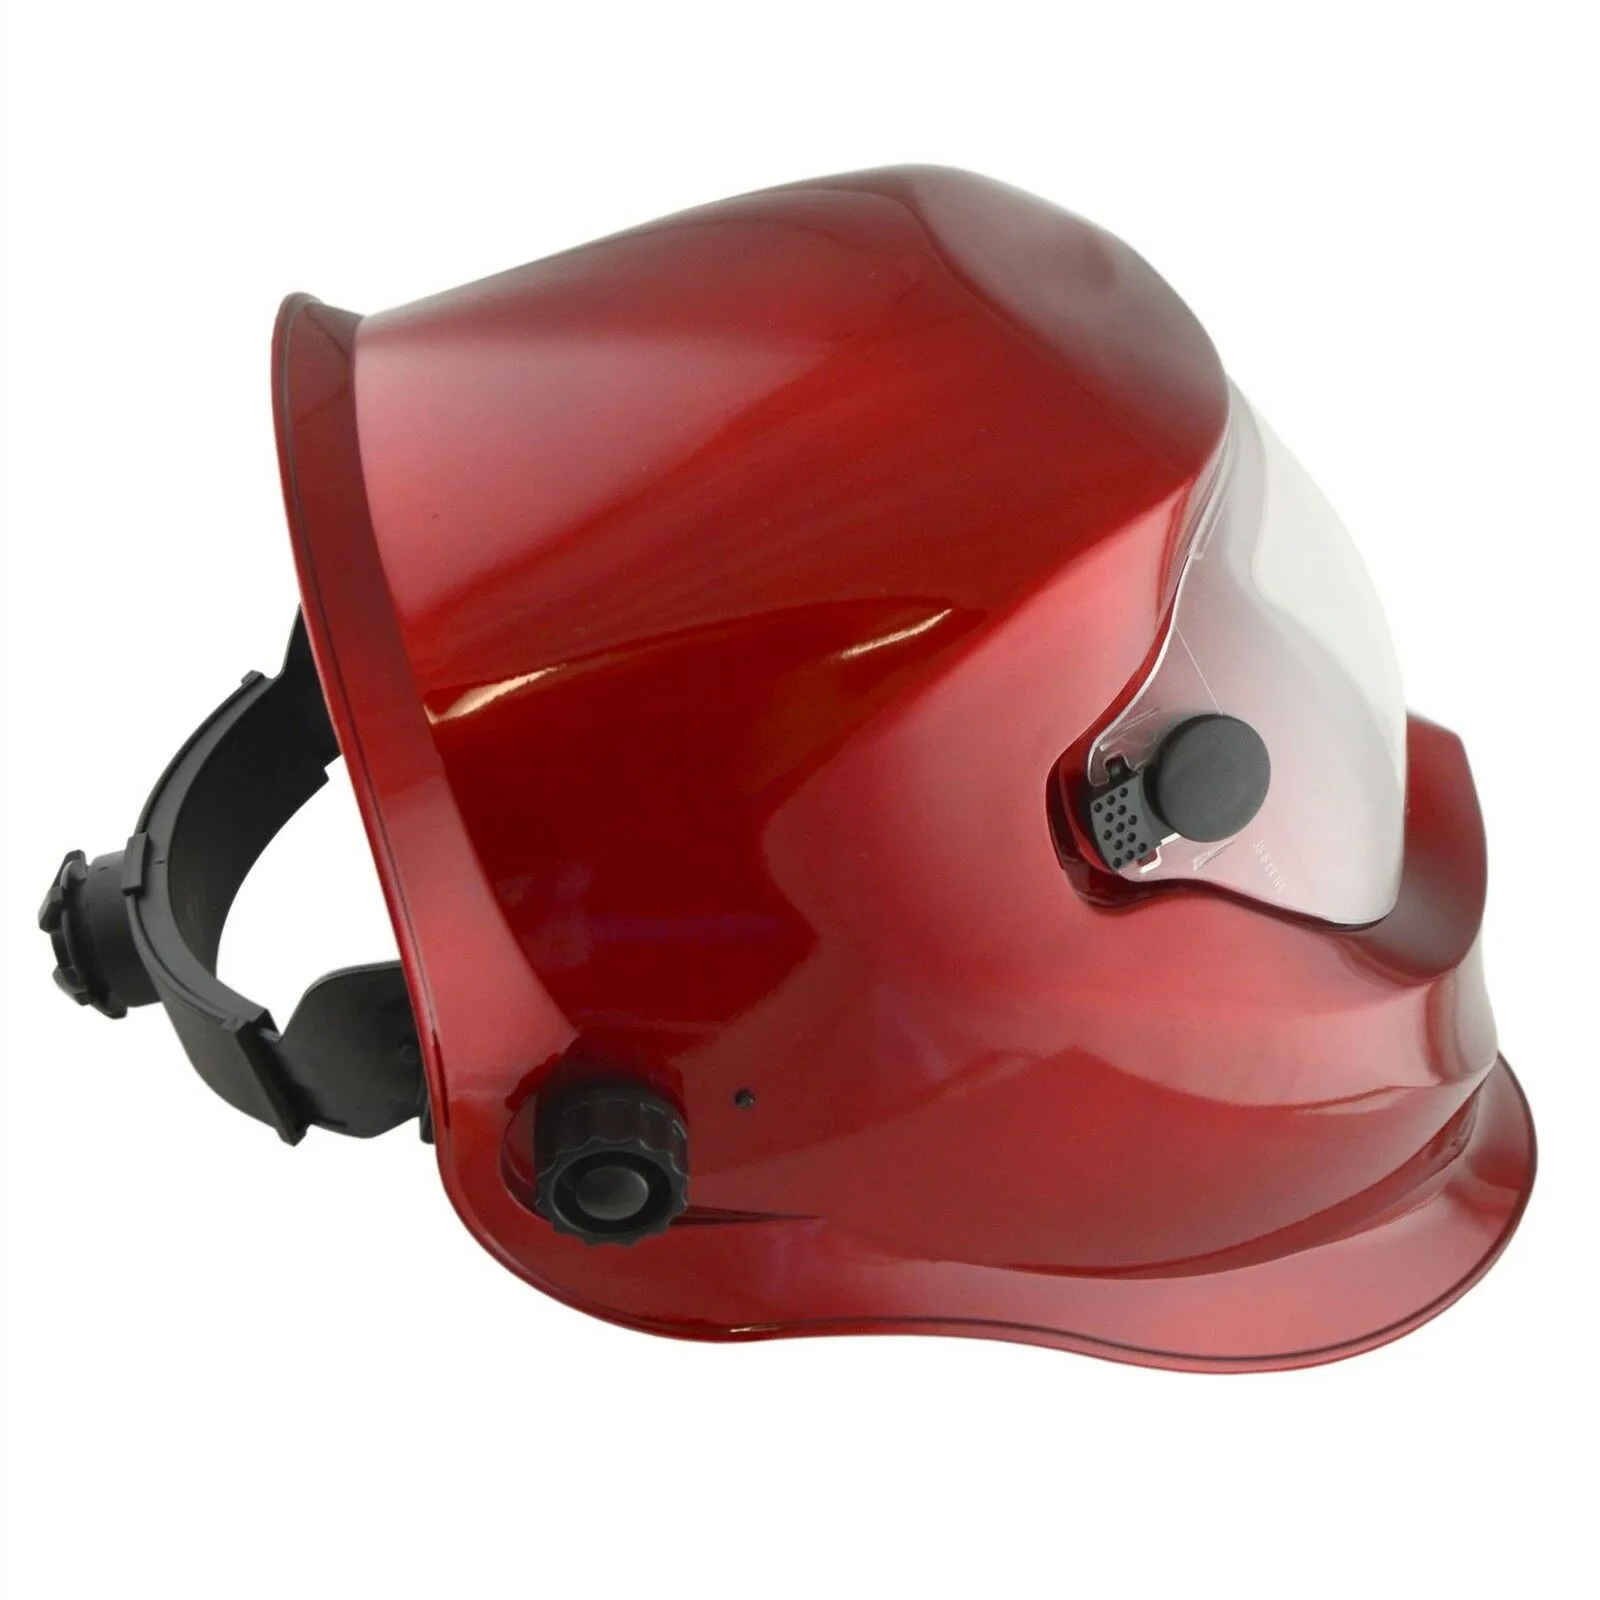 Spare Welding Lenses Protective Outer Lens Welding Helmet Mask Cover Filter Tools Ferramentas Herramientas Multitool Plastic